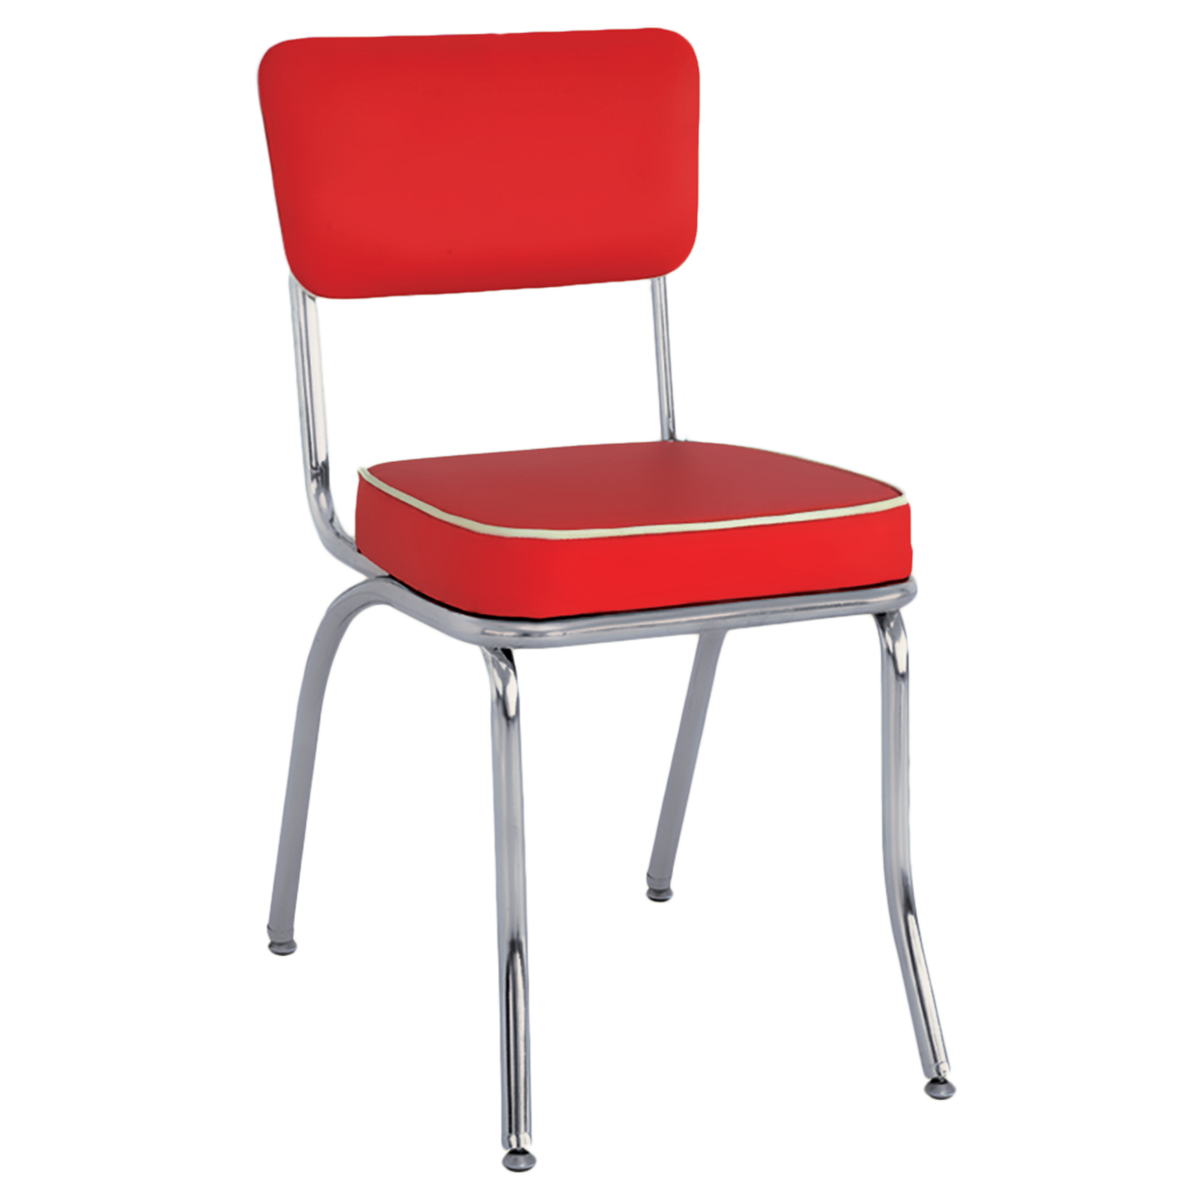 Metal Retro Chrome Chair